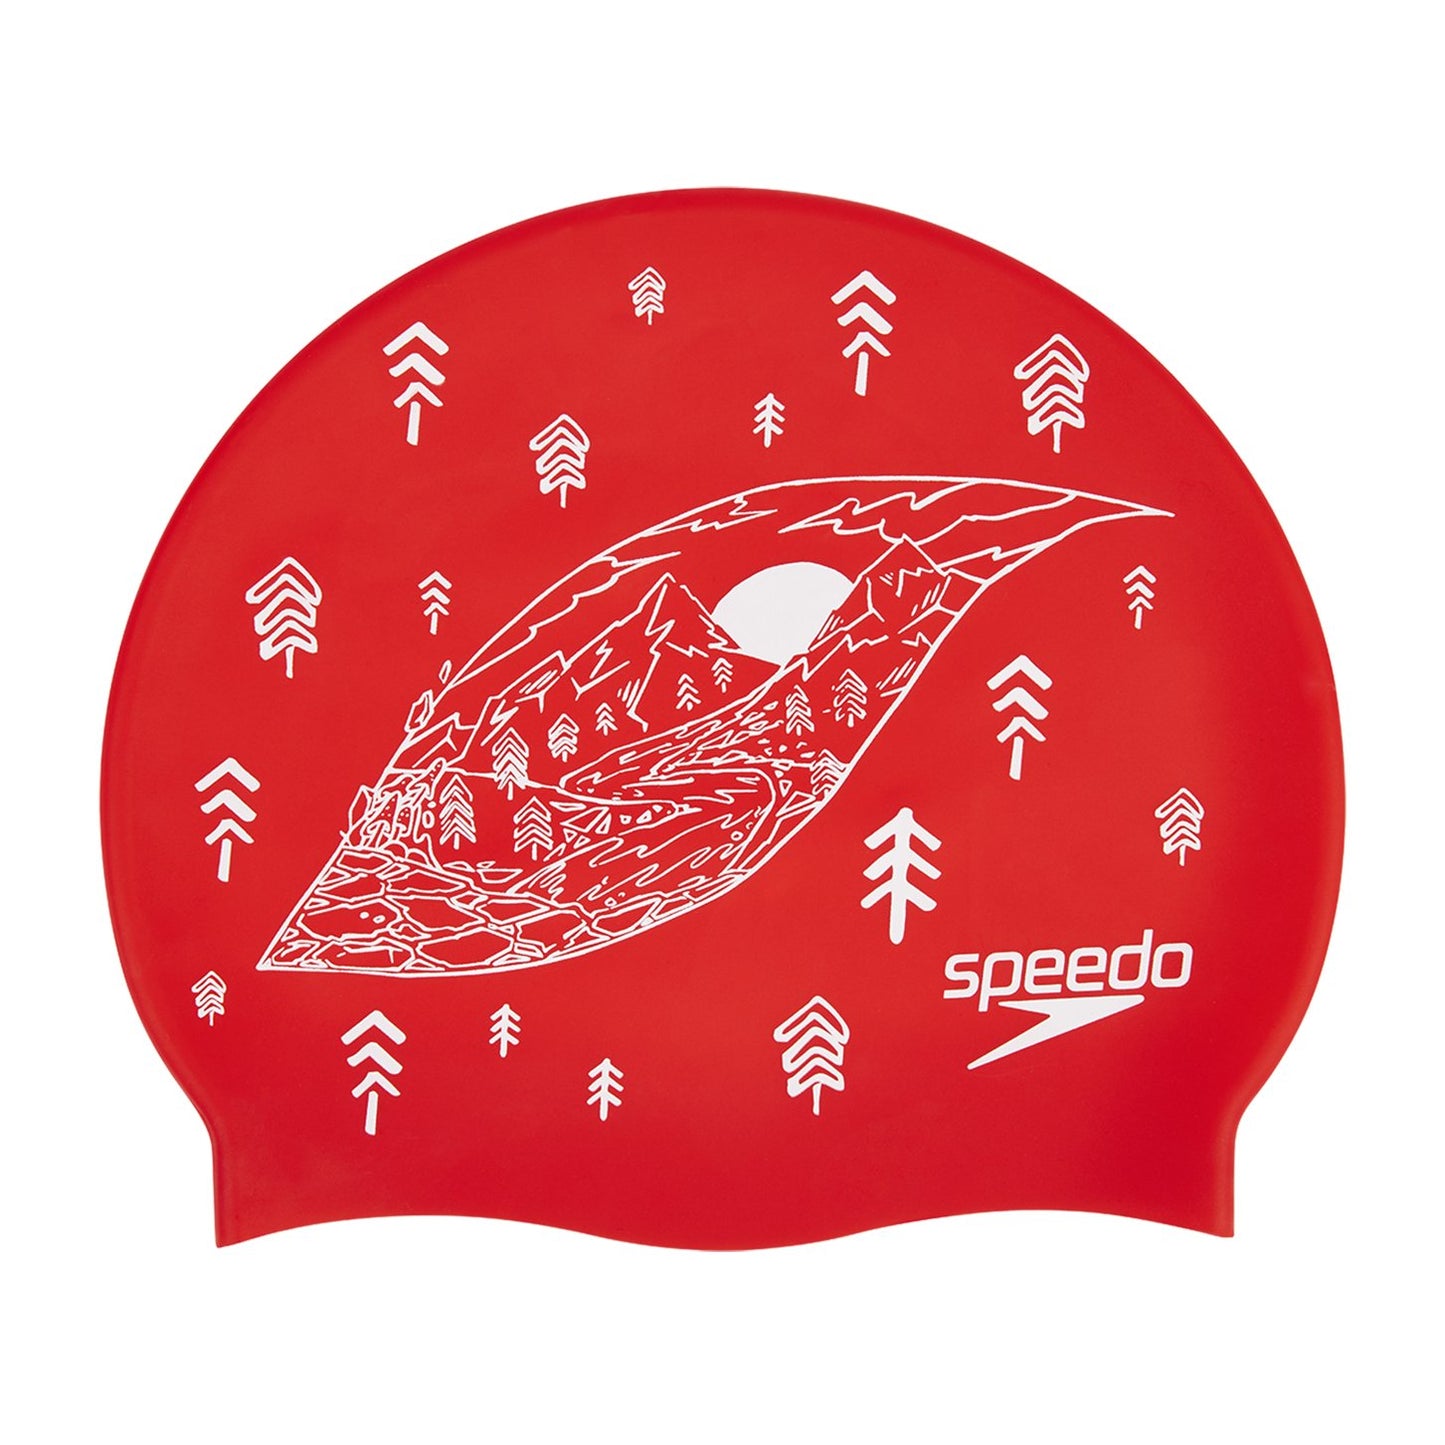 Speedo Slogan Print Swimming Cap, Free Size (Red/White) - Best Price online Prokicksports.com